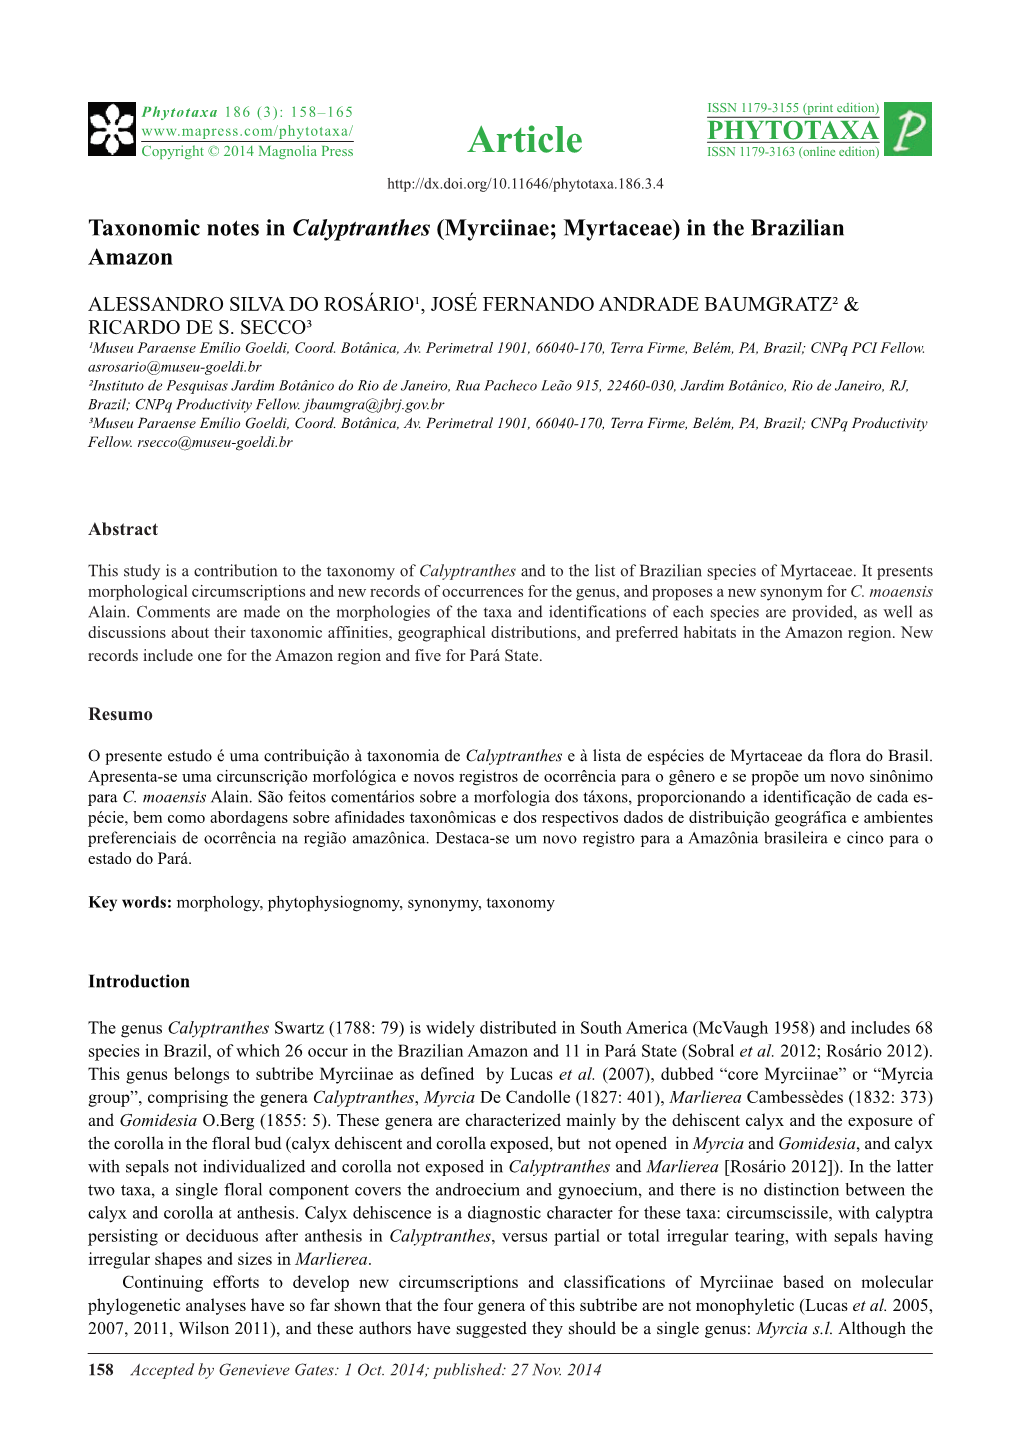 Taxonomic Notes in Calyptranthes (Myrciinae; Myrtaceae) in the Brazilian Amazon